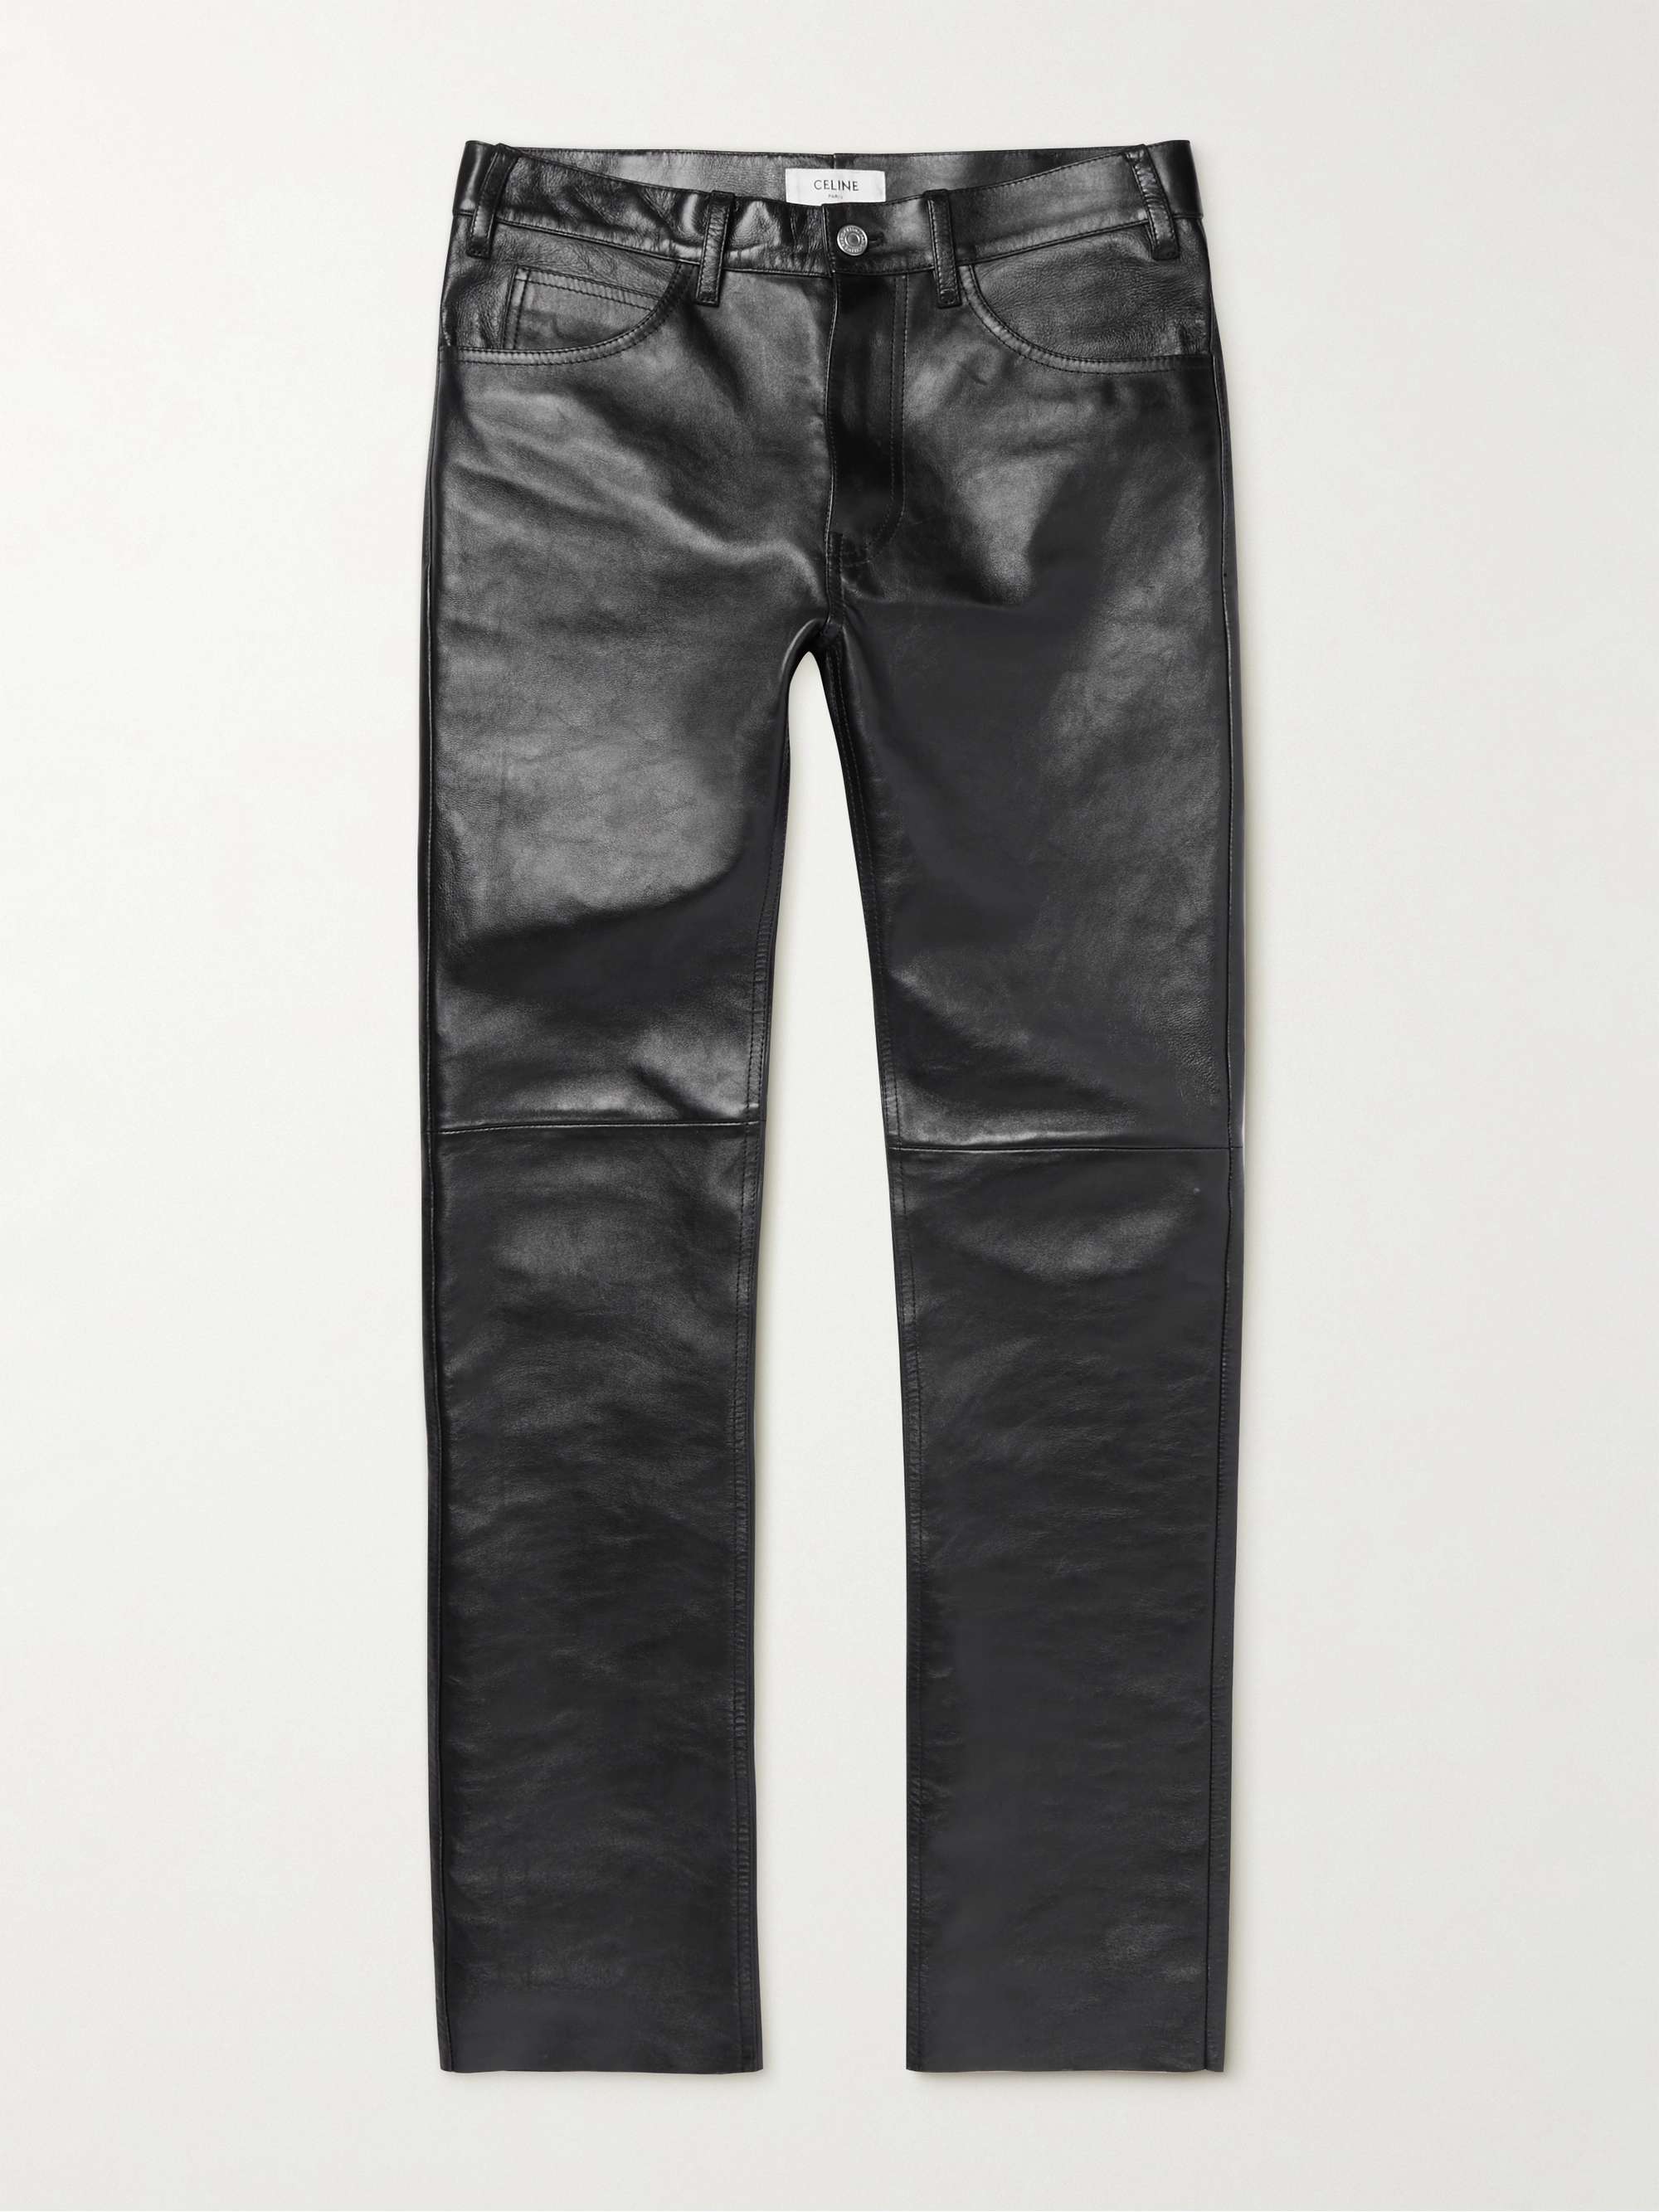 CELINE Panelled Full-Grain Leather Trousers